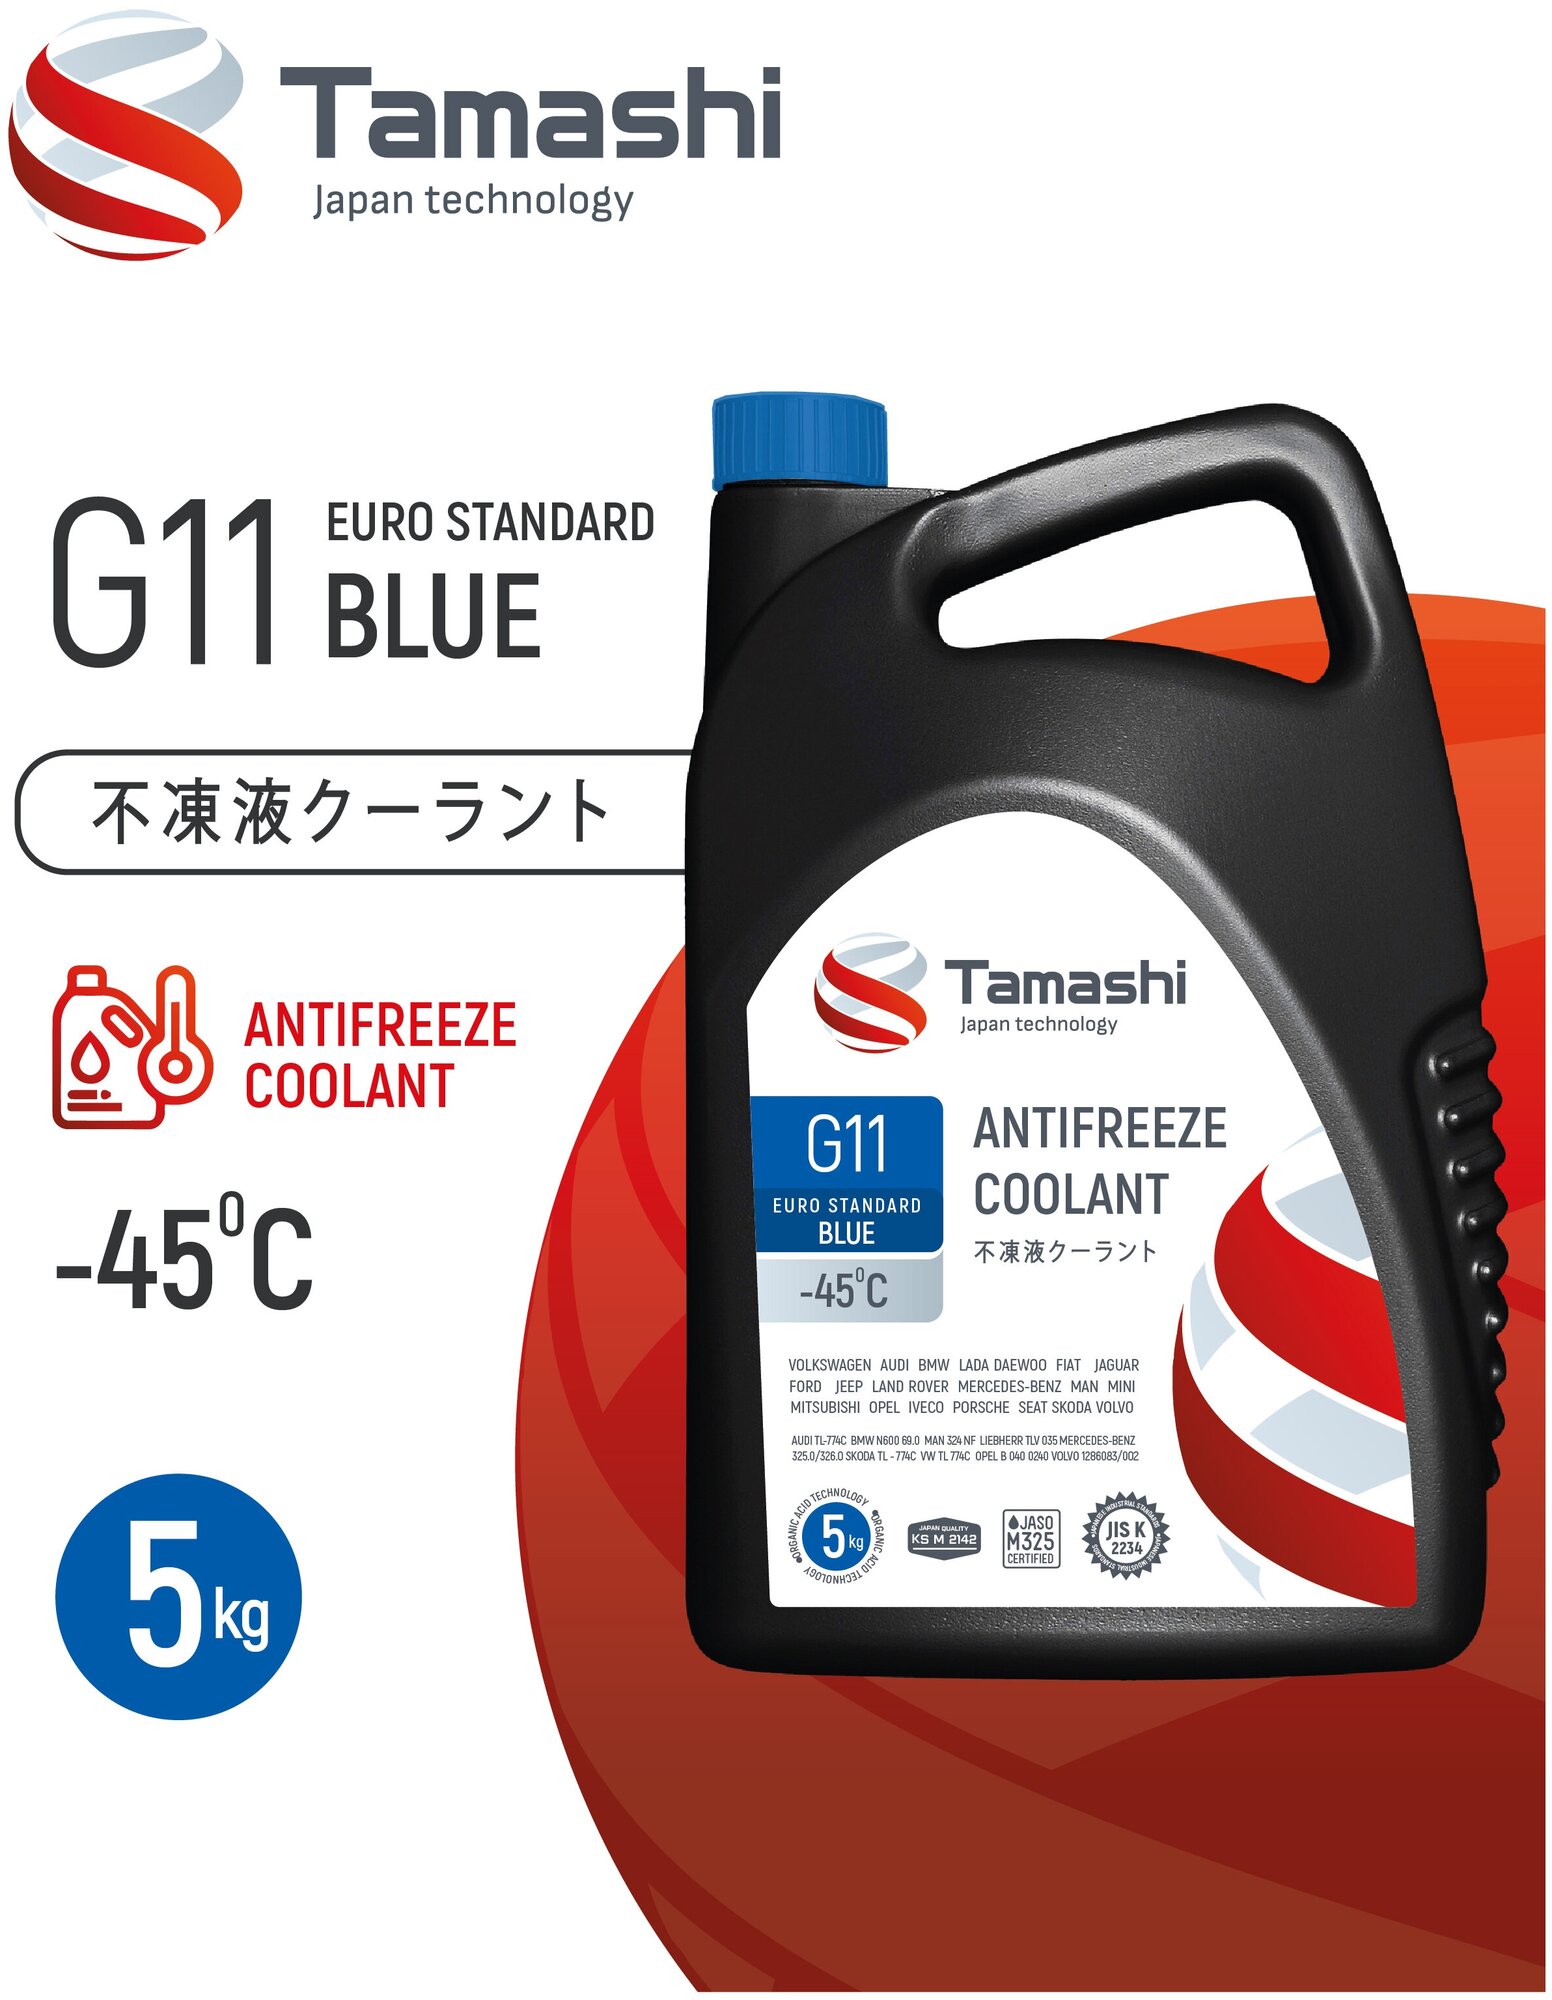 Антифриз TAMASHI G11 EURO STANDARD BLUE, -45C, 5кг, Синий